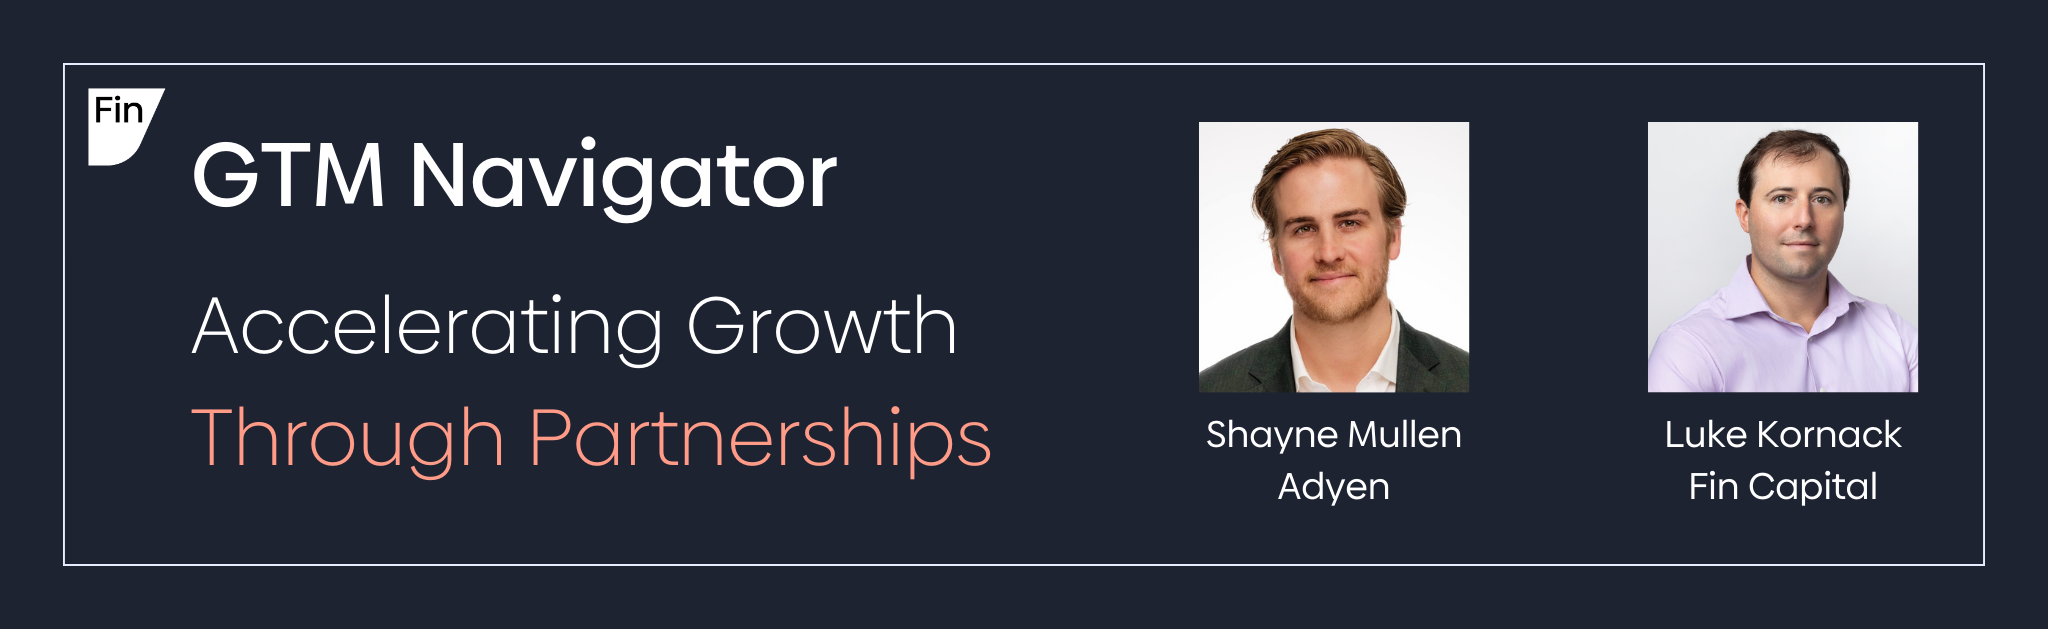 GTM Navigator: Accelerating Growth Through Partnerships 